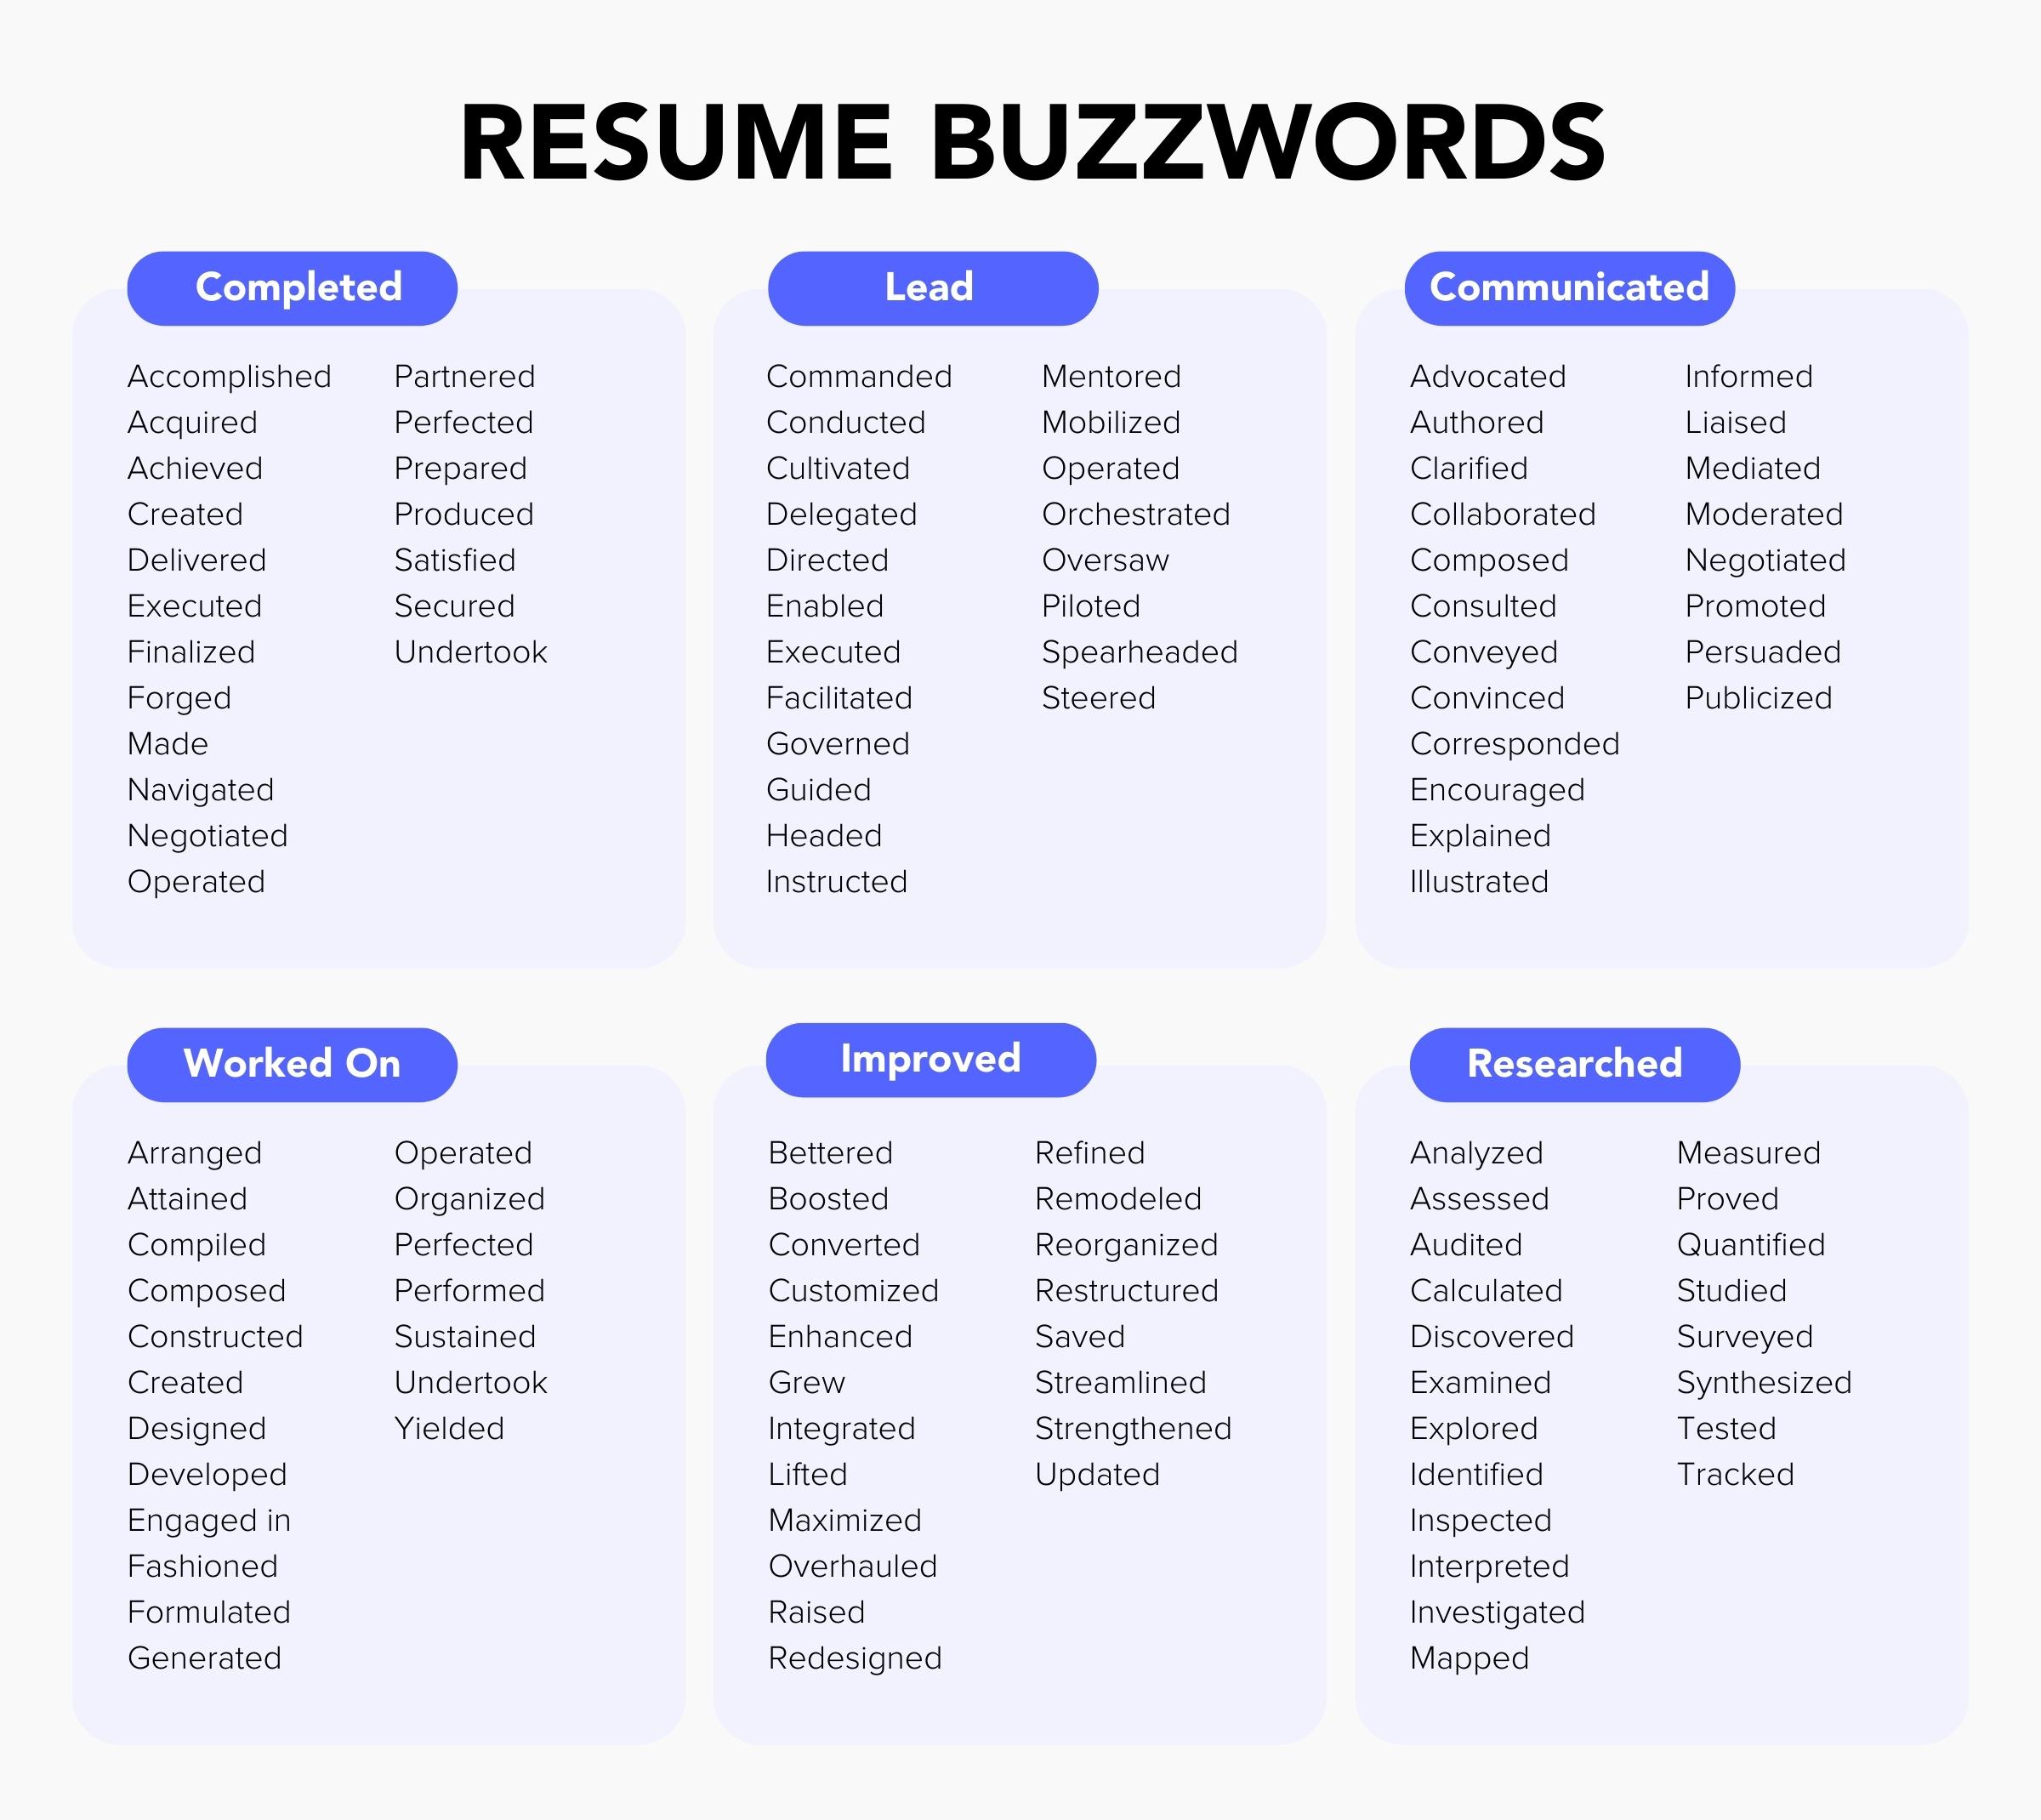 social work resume buzzwords